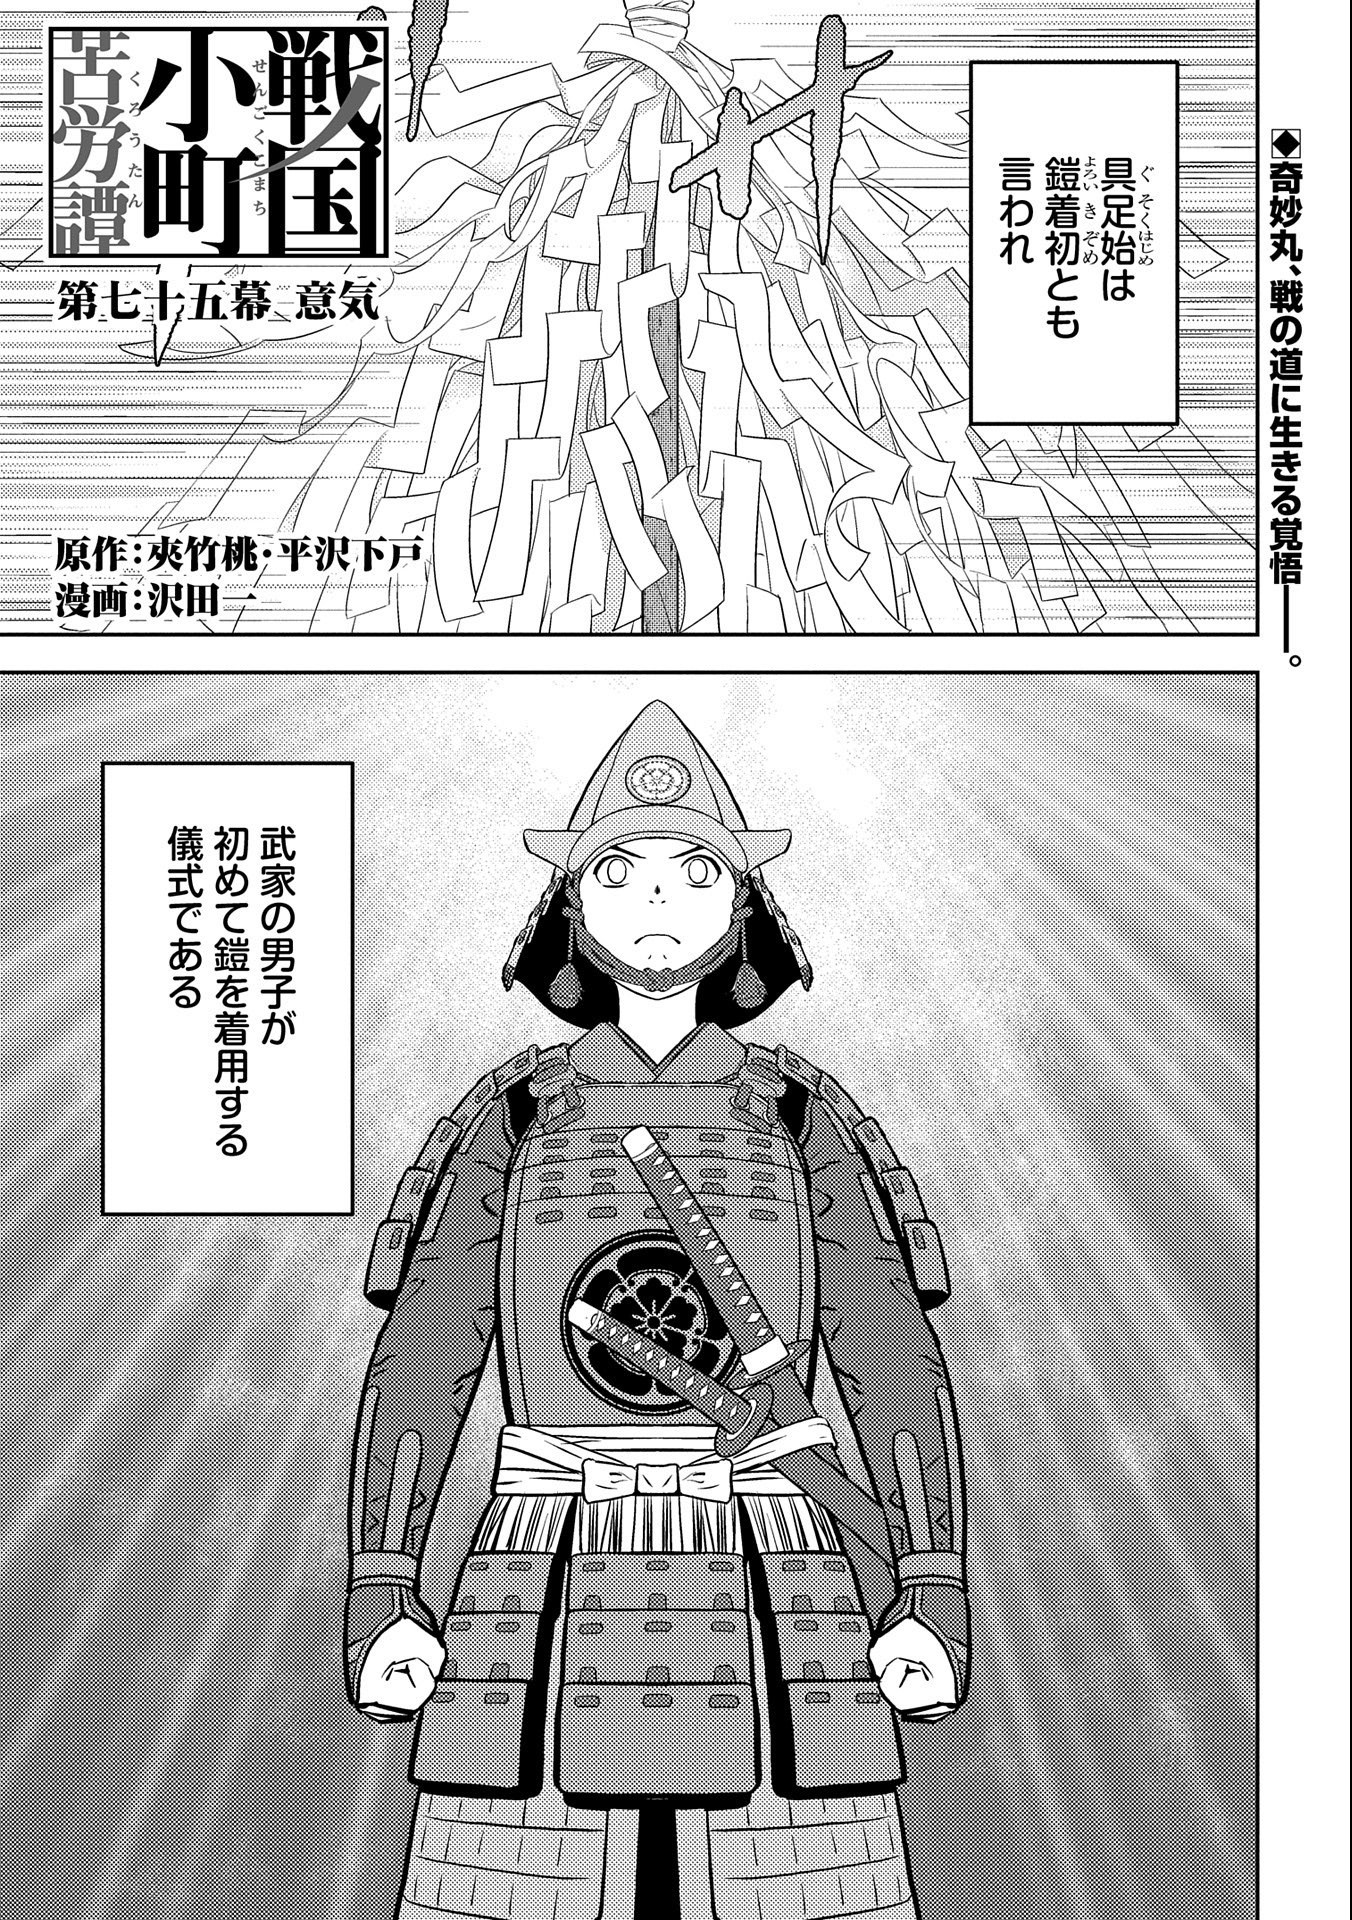 Sengoku Komachi Kuroutan - Chapter 75 - Page 1